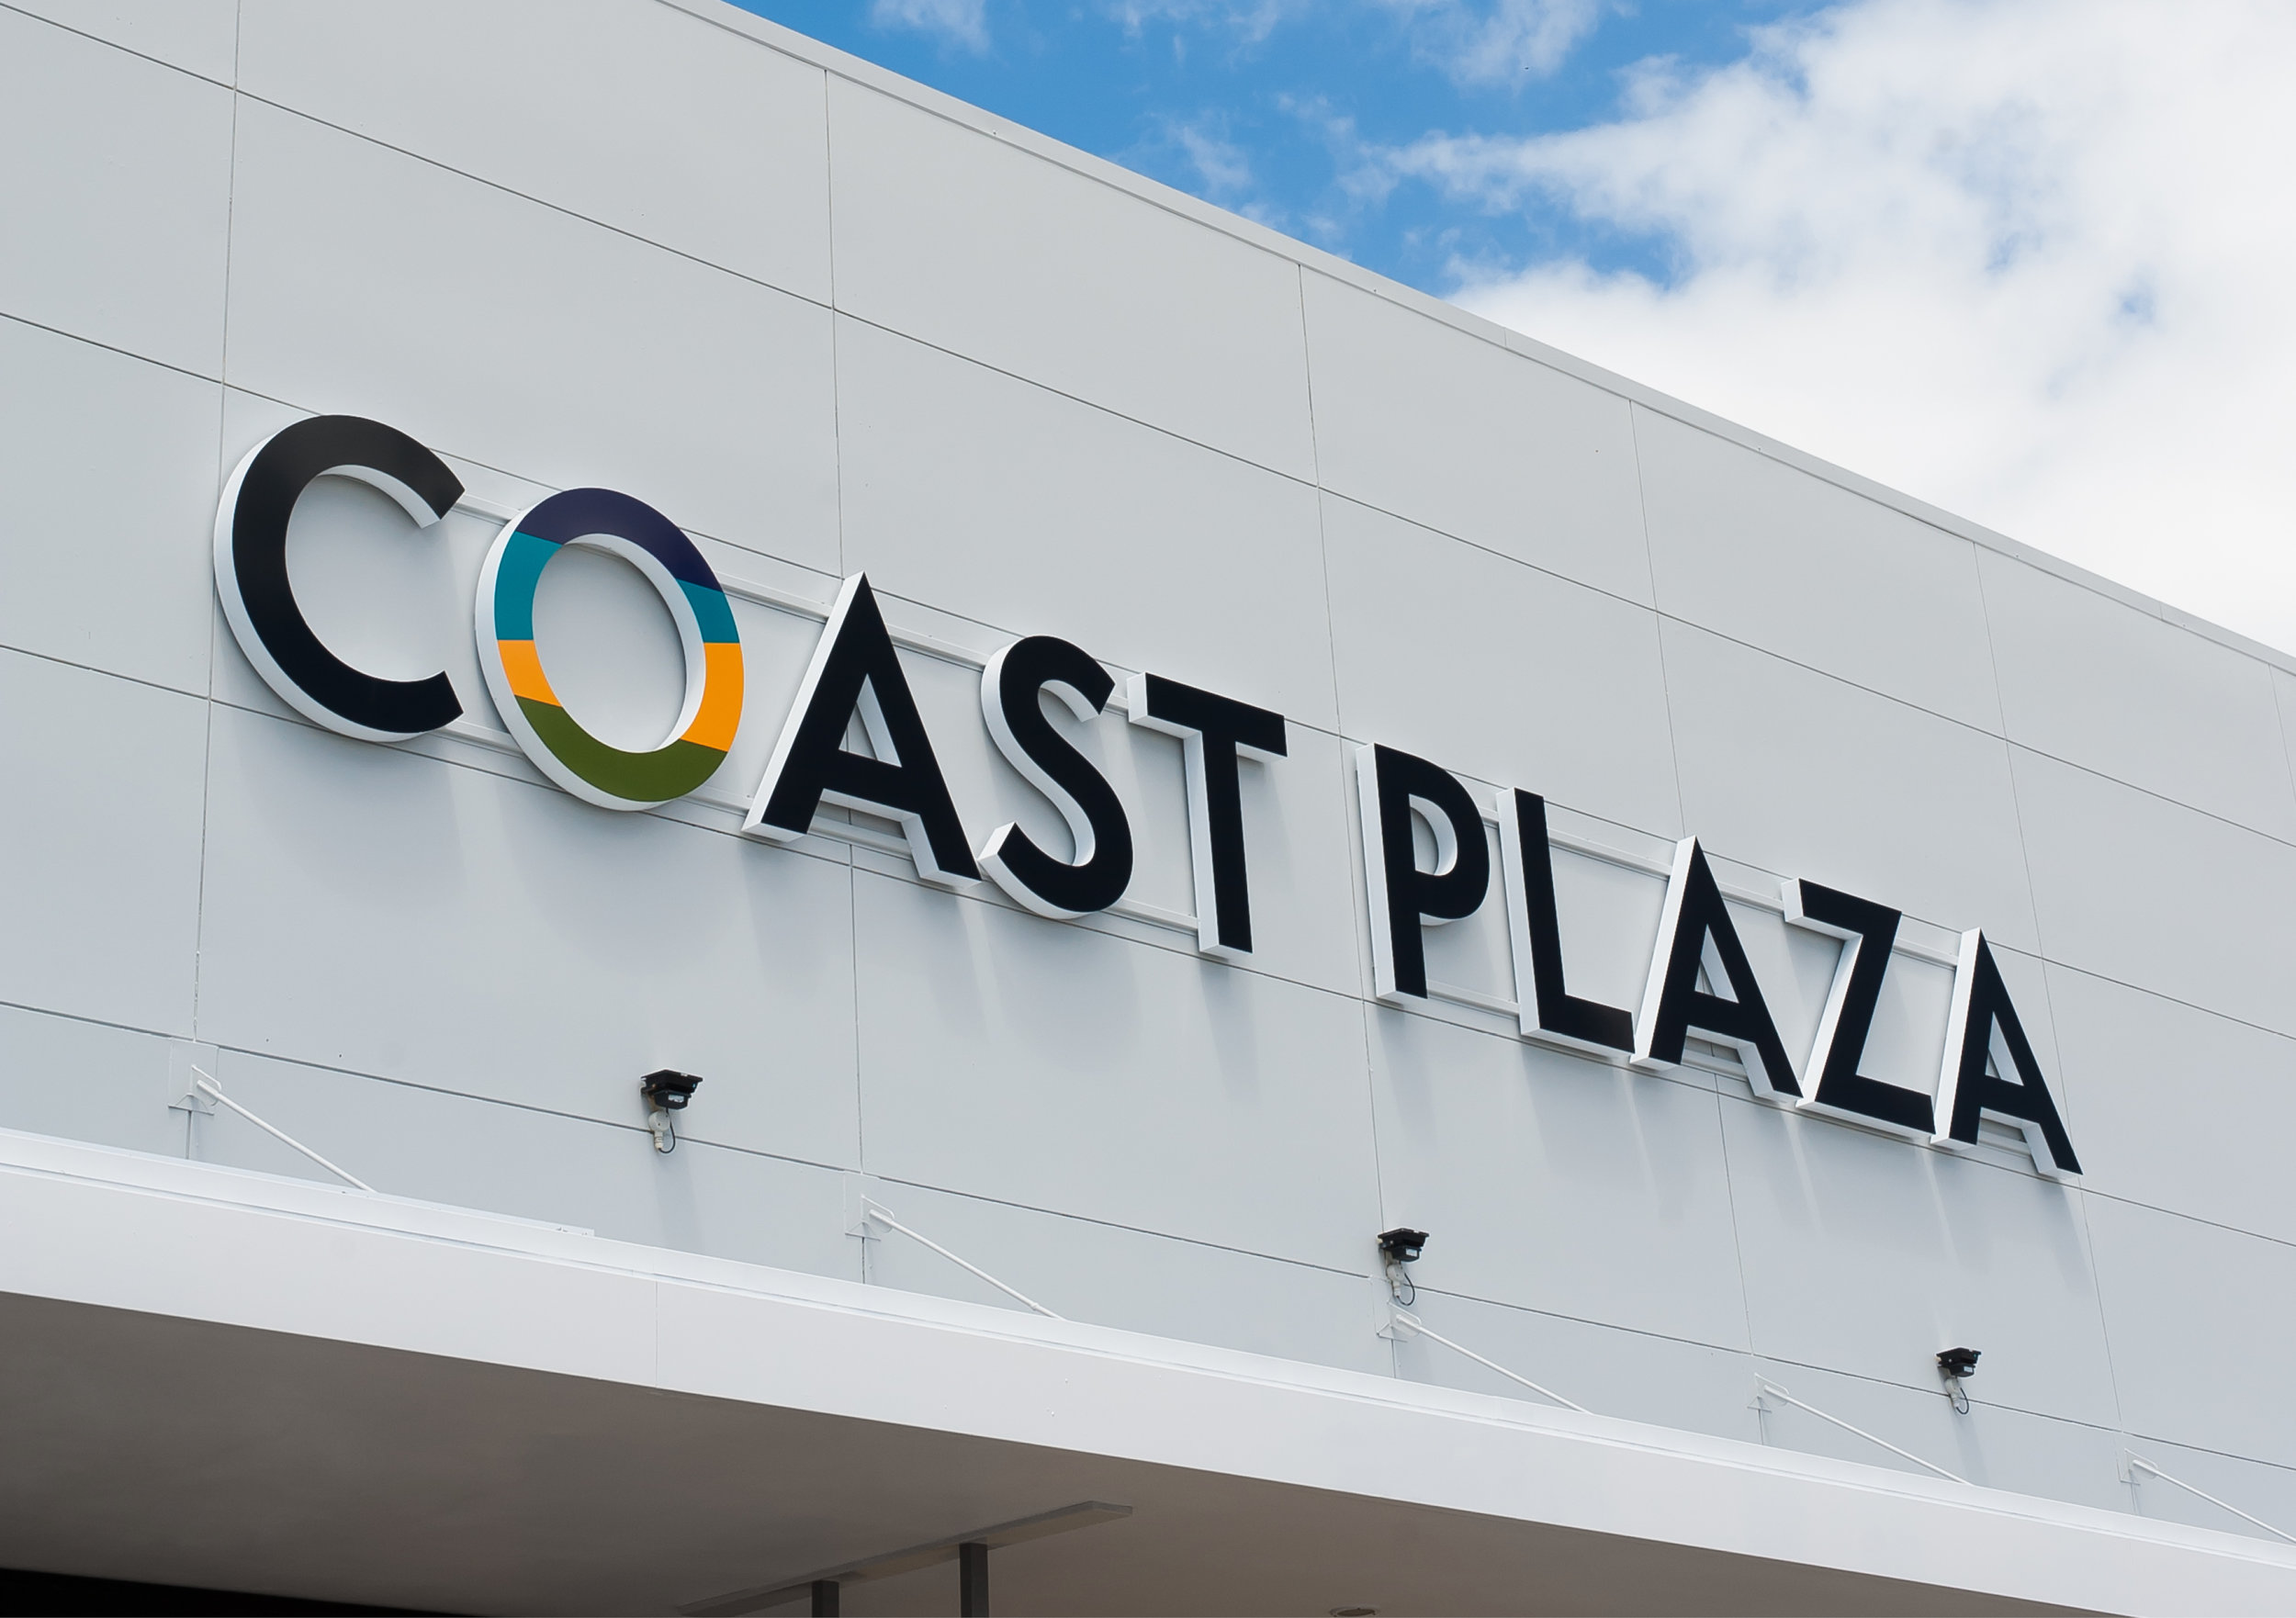 Coast Plaza